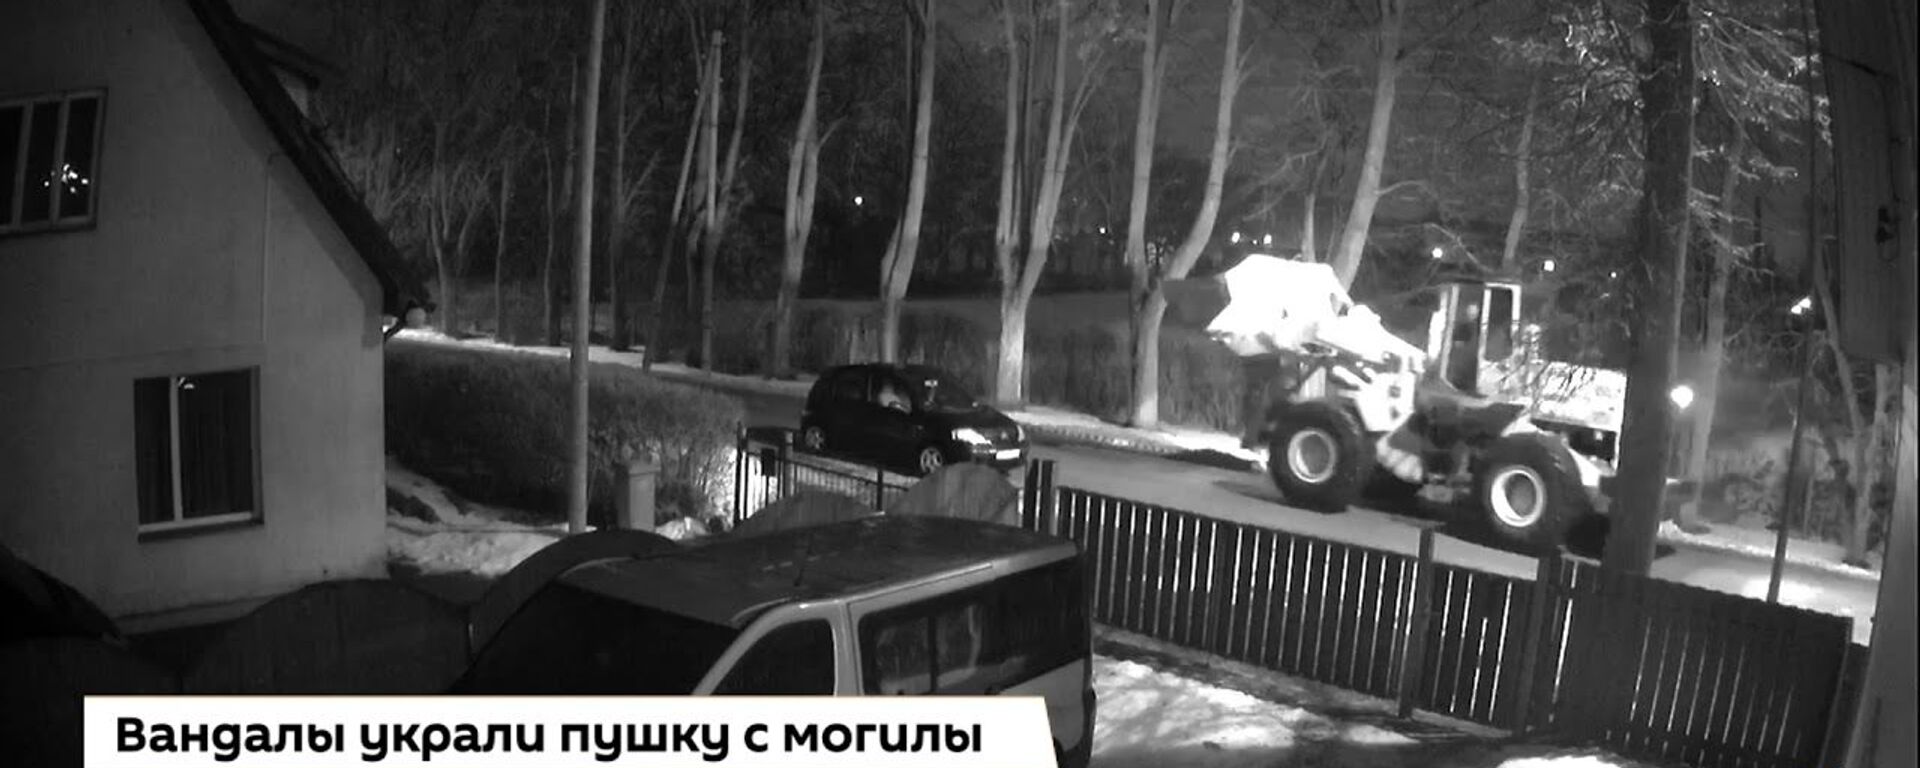 Вывоз пушки с разрушенного монумента в Екабпилсе попал на видео - Sputnik Латвия, 1920, 25.02.2021